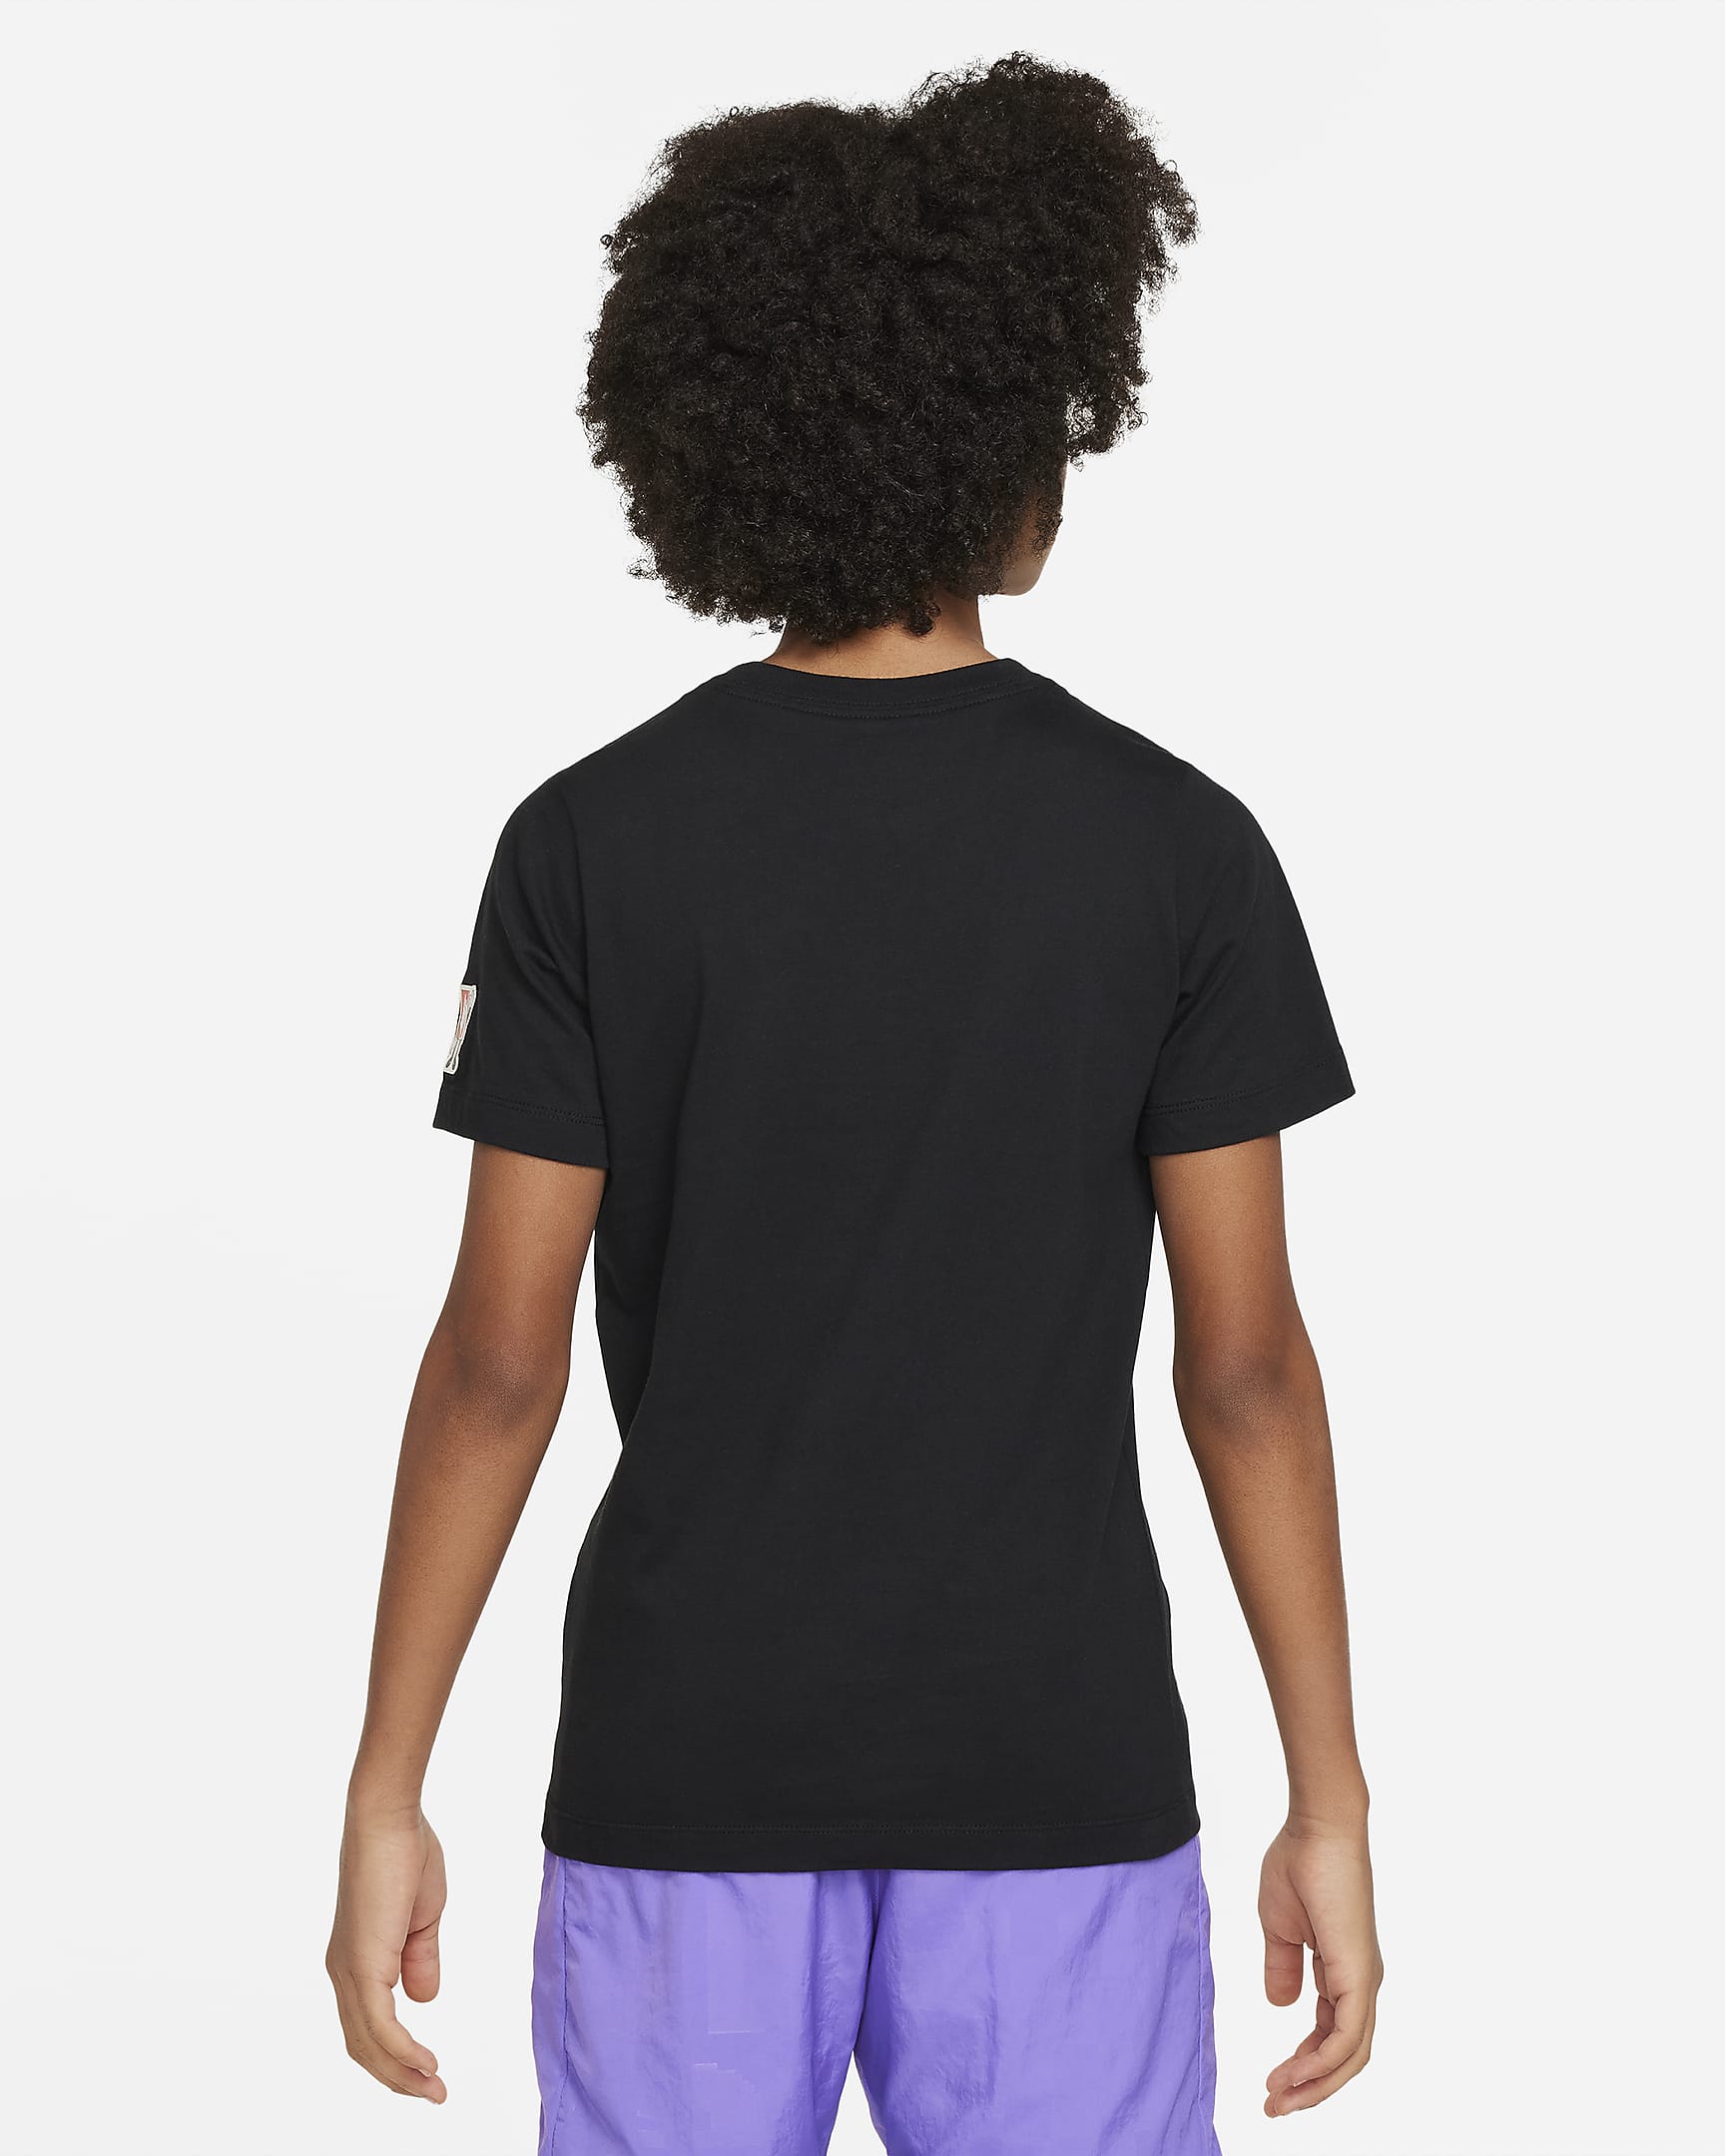 Nike Sportswear Older Kids' T-Shirt. Nike PH